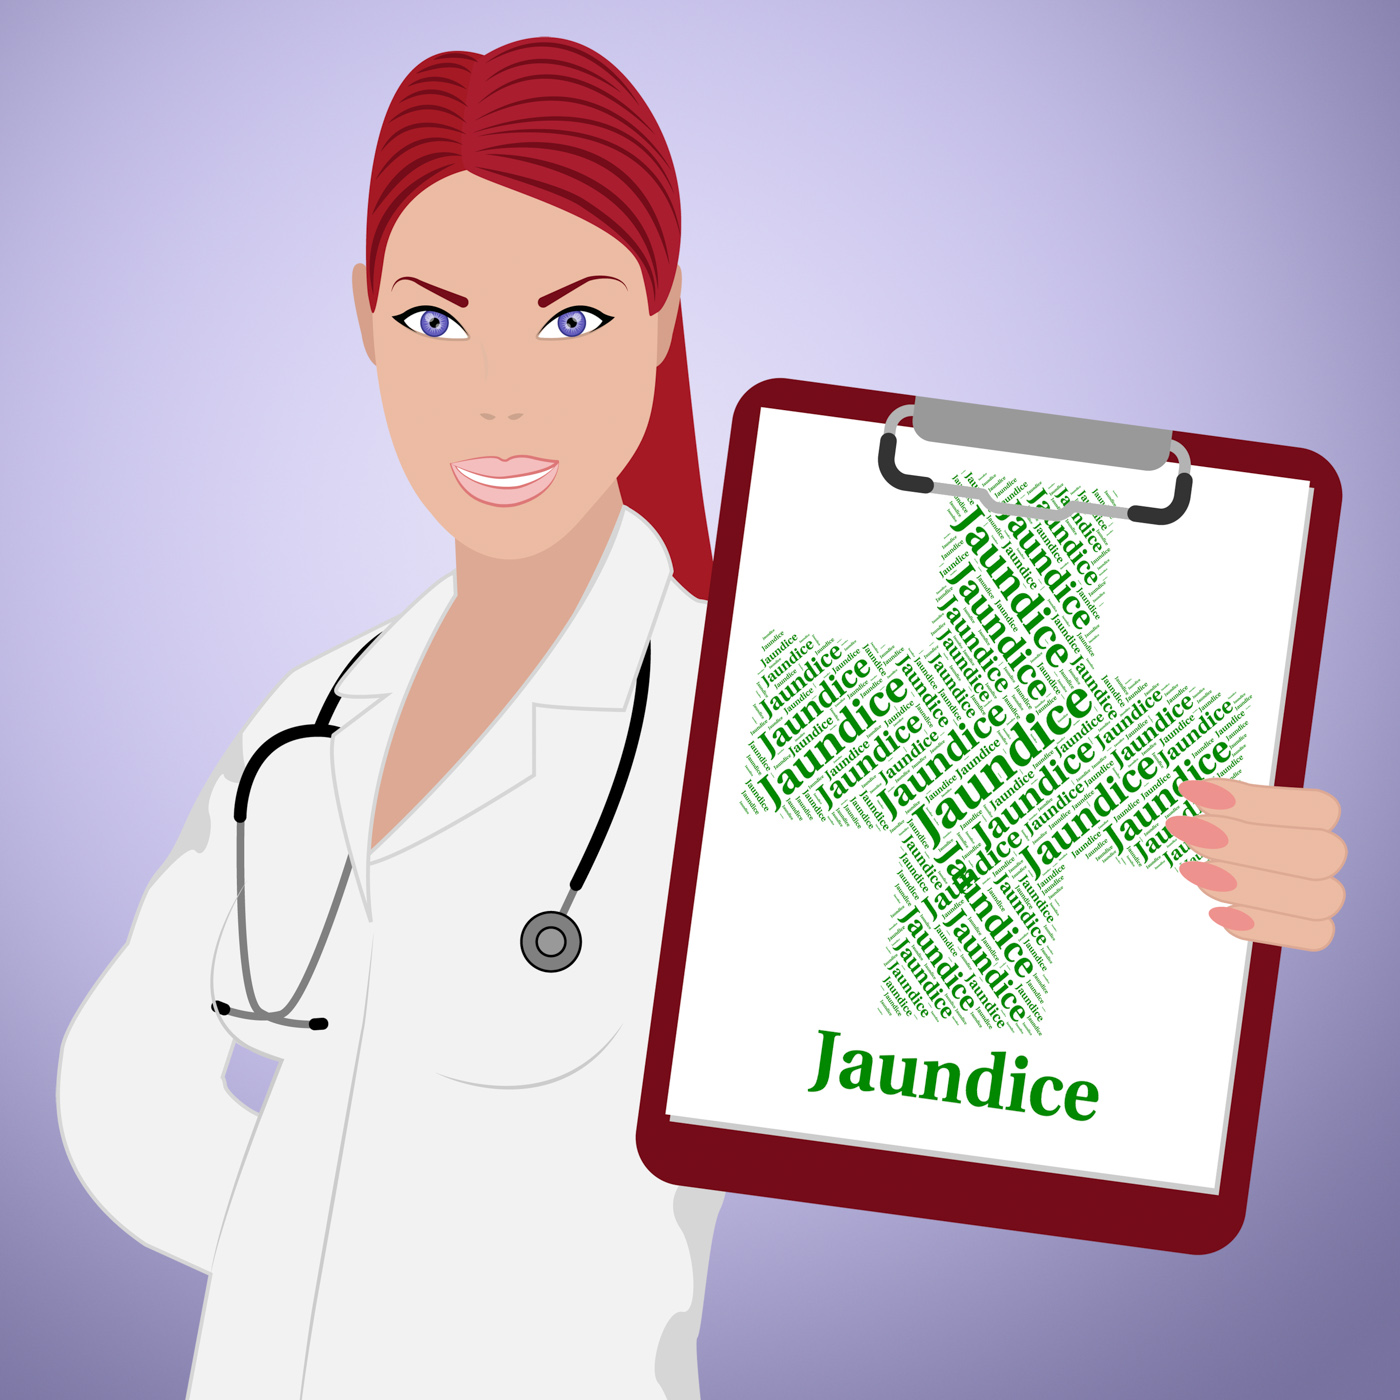 Jaundice word indicates poor health and ailment photo